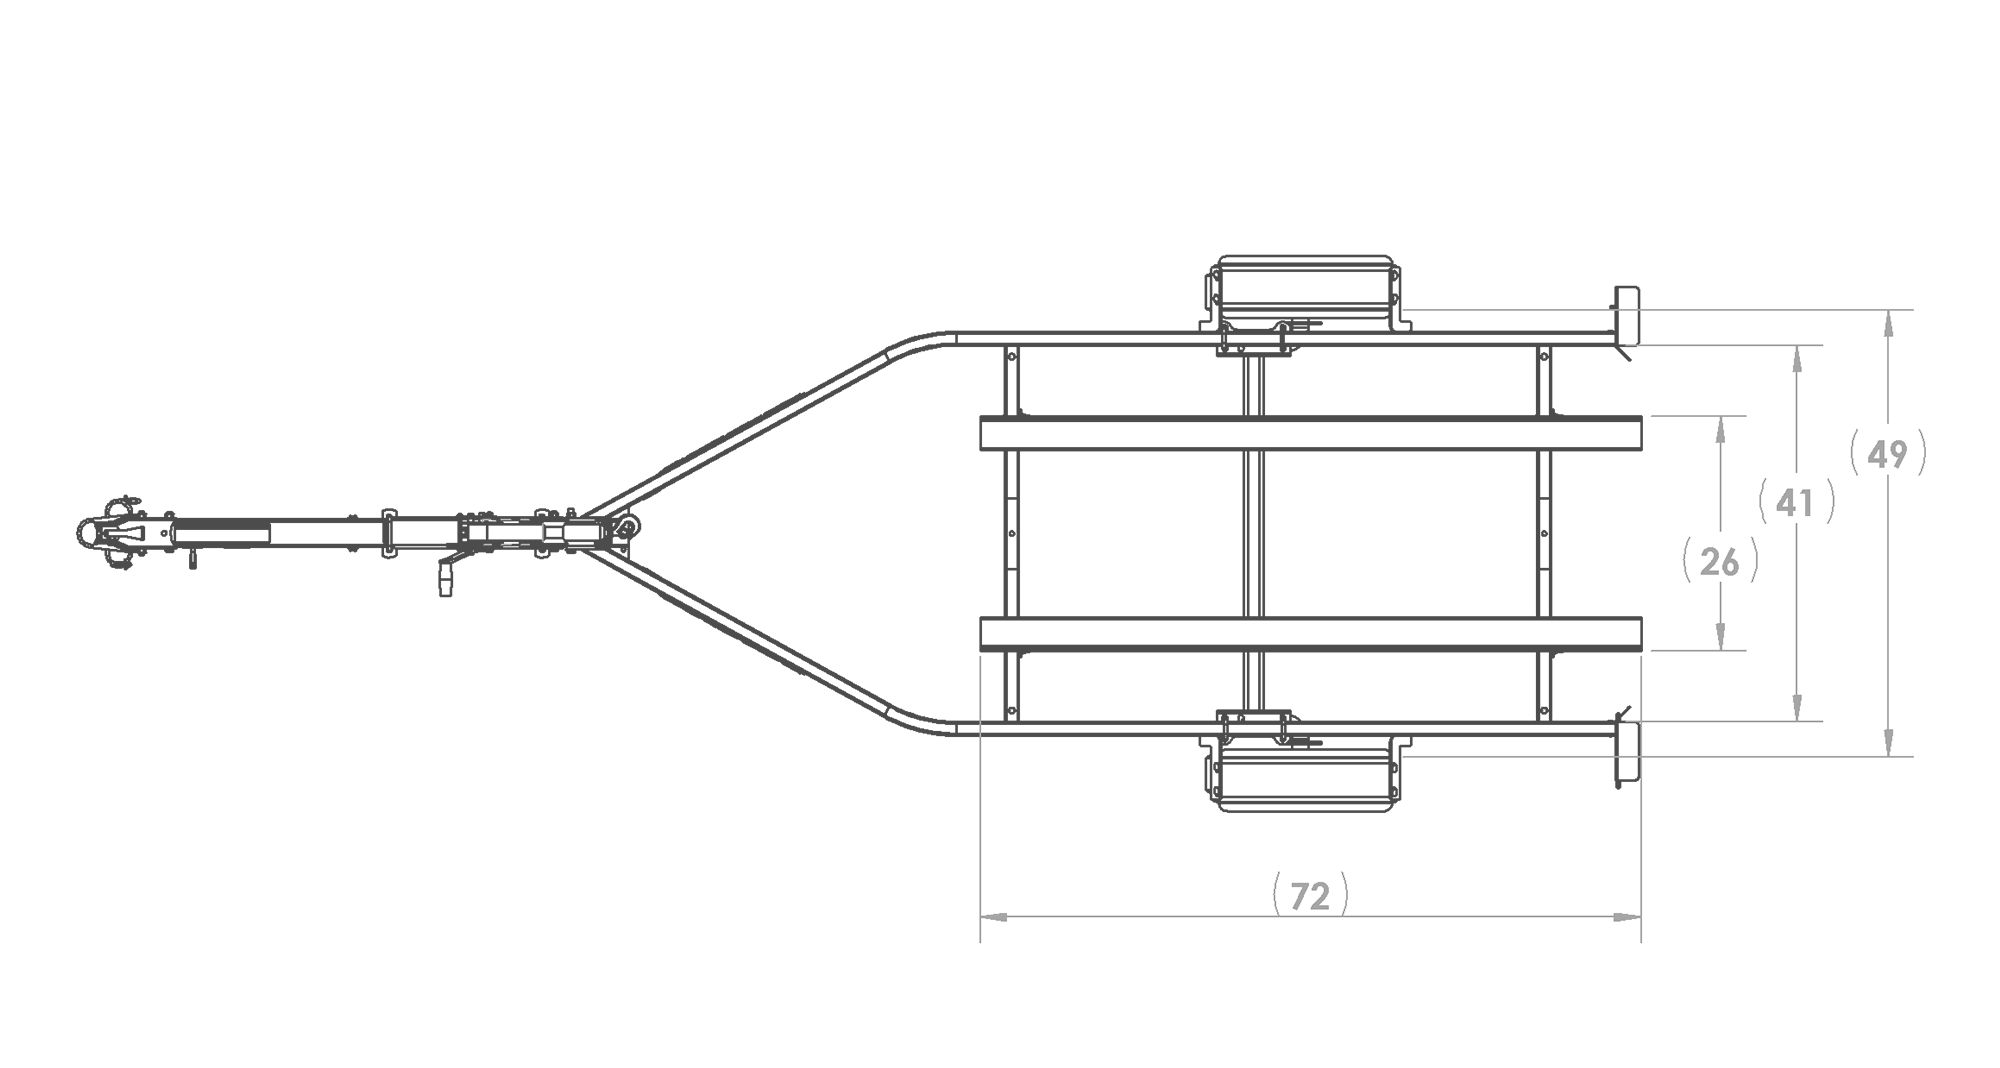 Karavan Trailer's Single Watercraft Low Profile Steel Trailer, model number WCE-1250-46-L, Top View Measurement